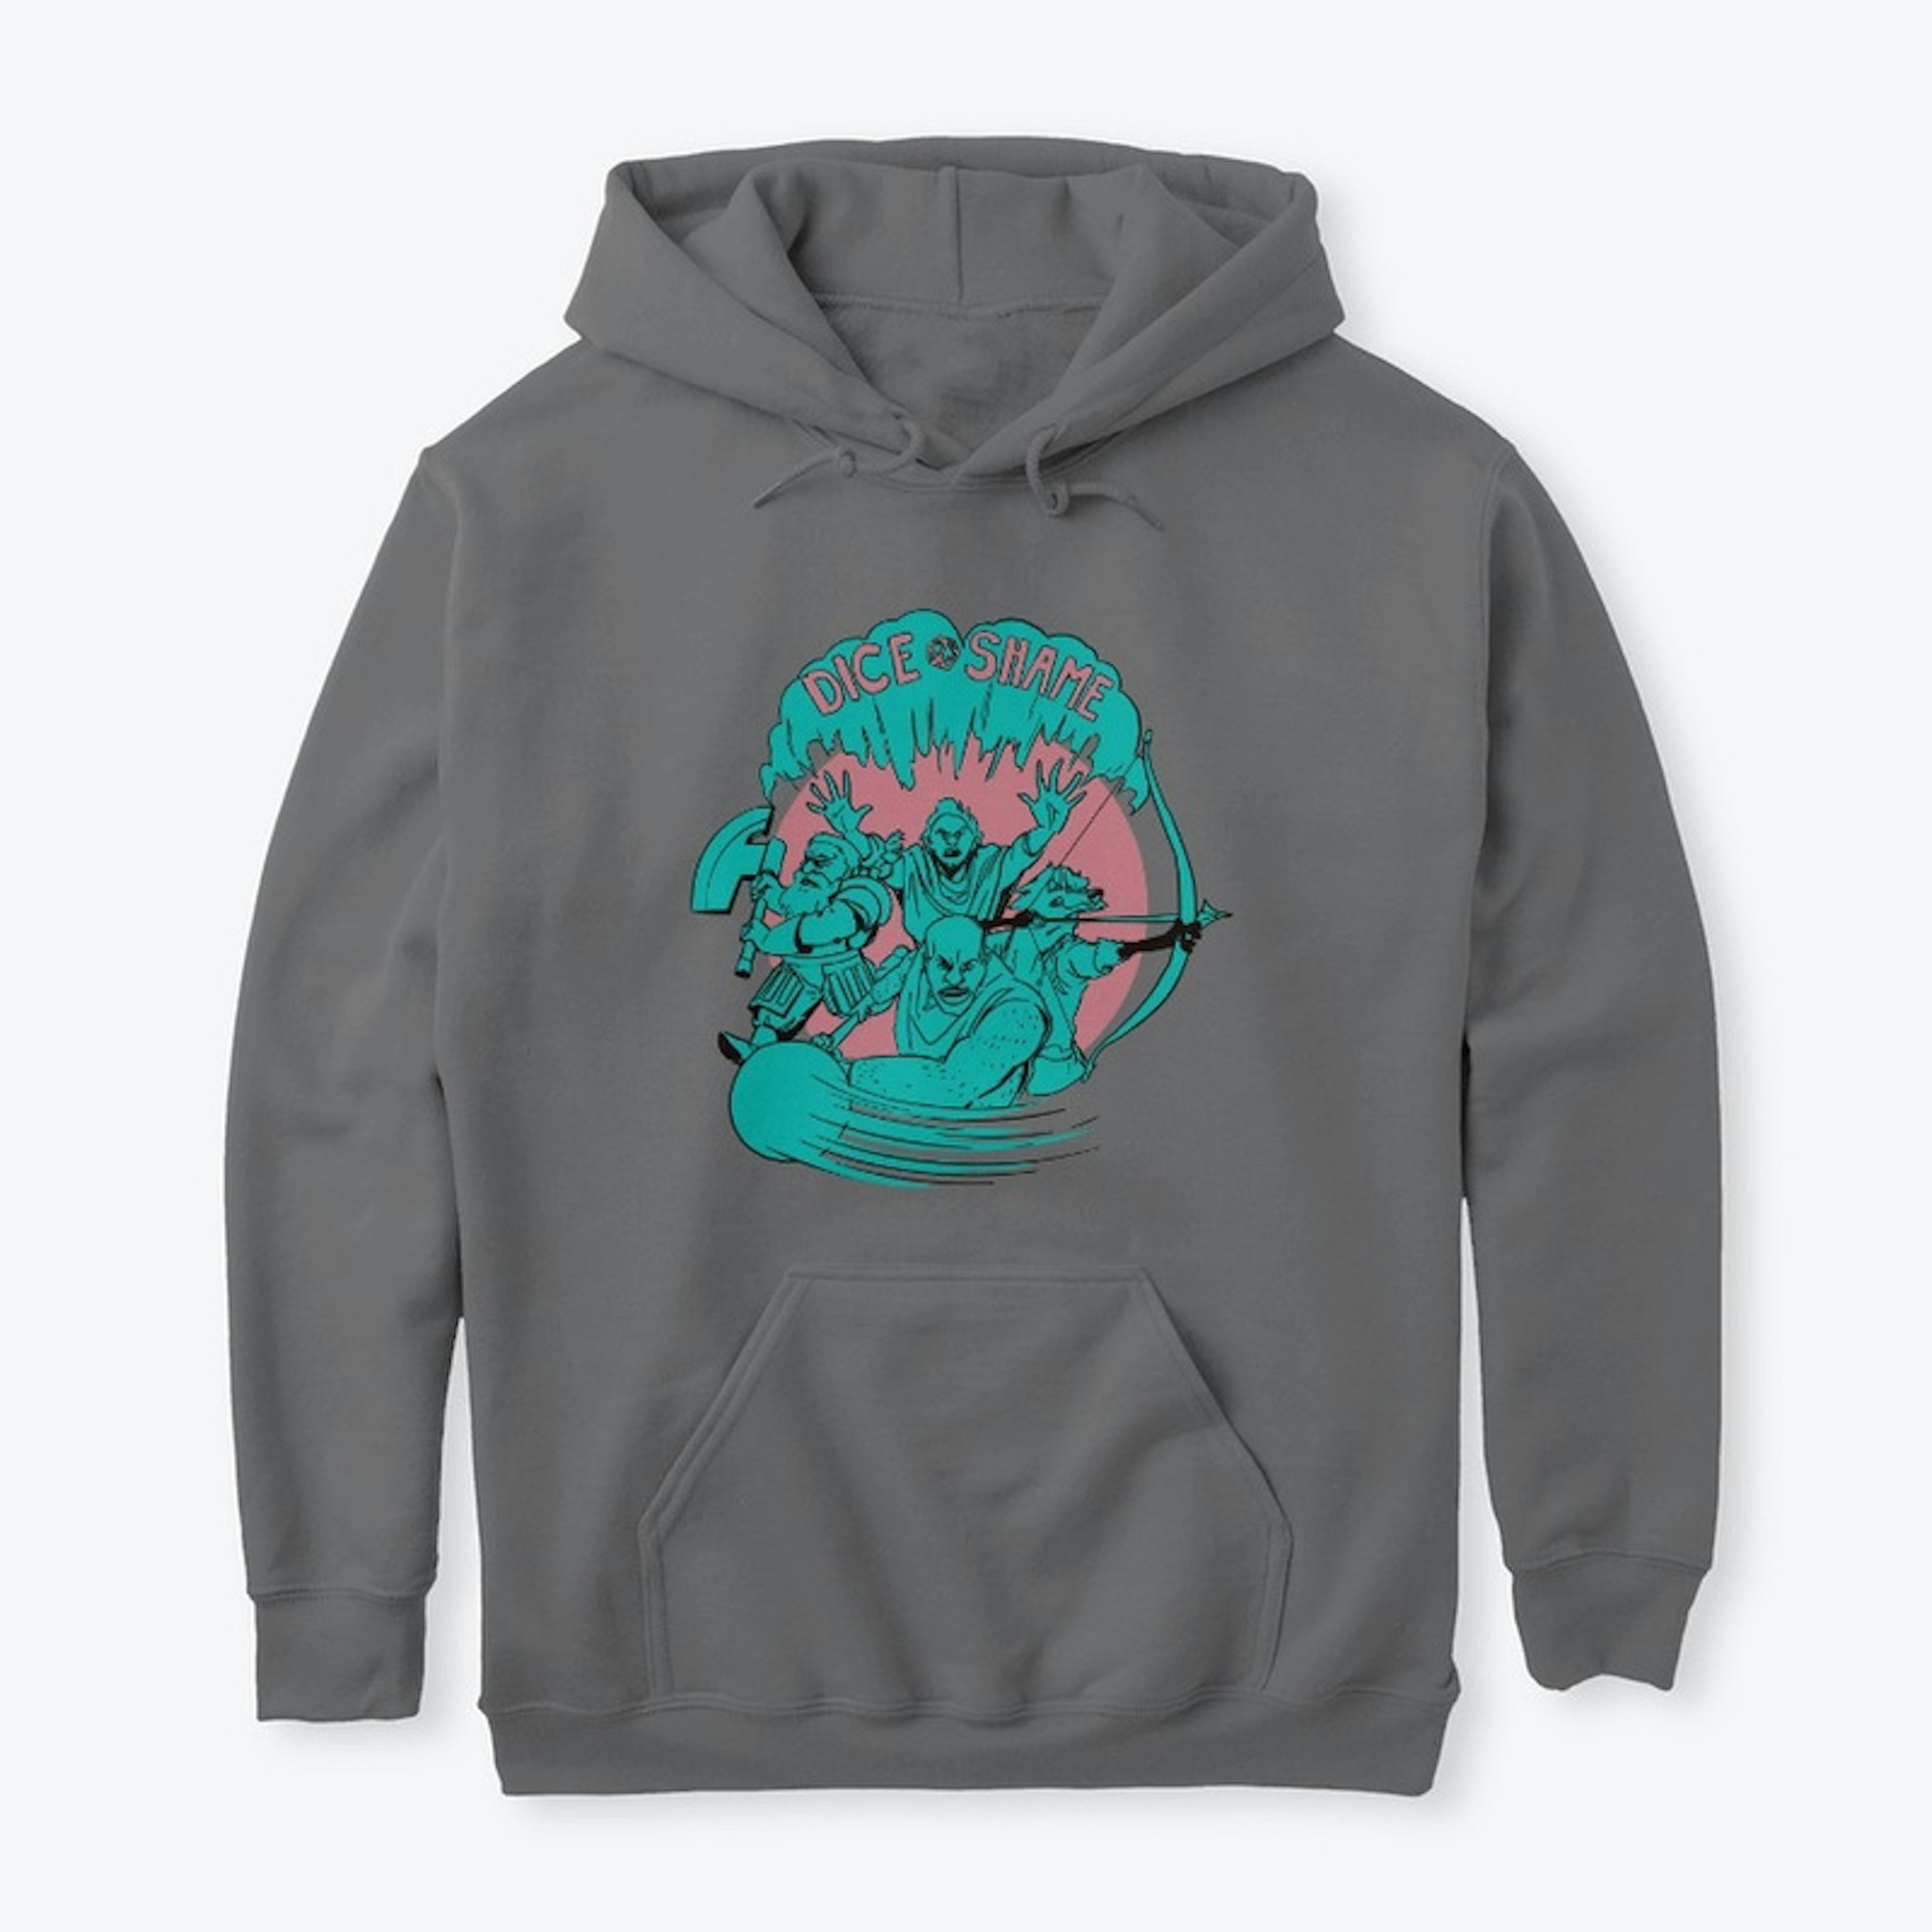 Cyan Initiative hoodie